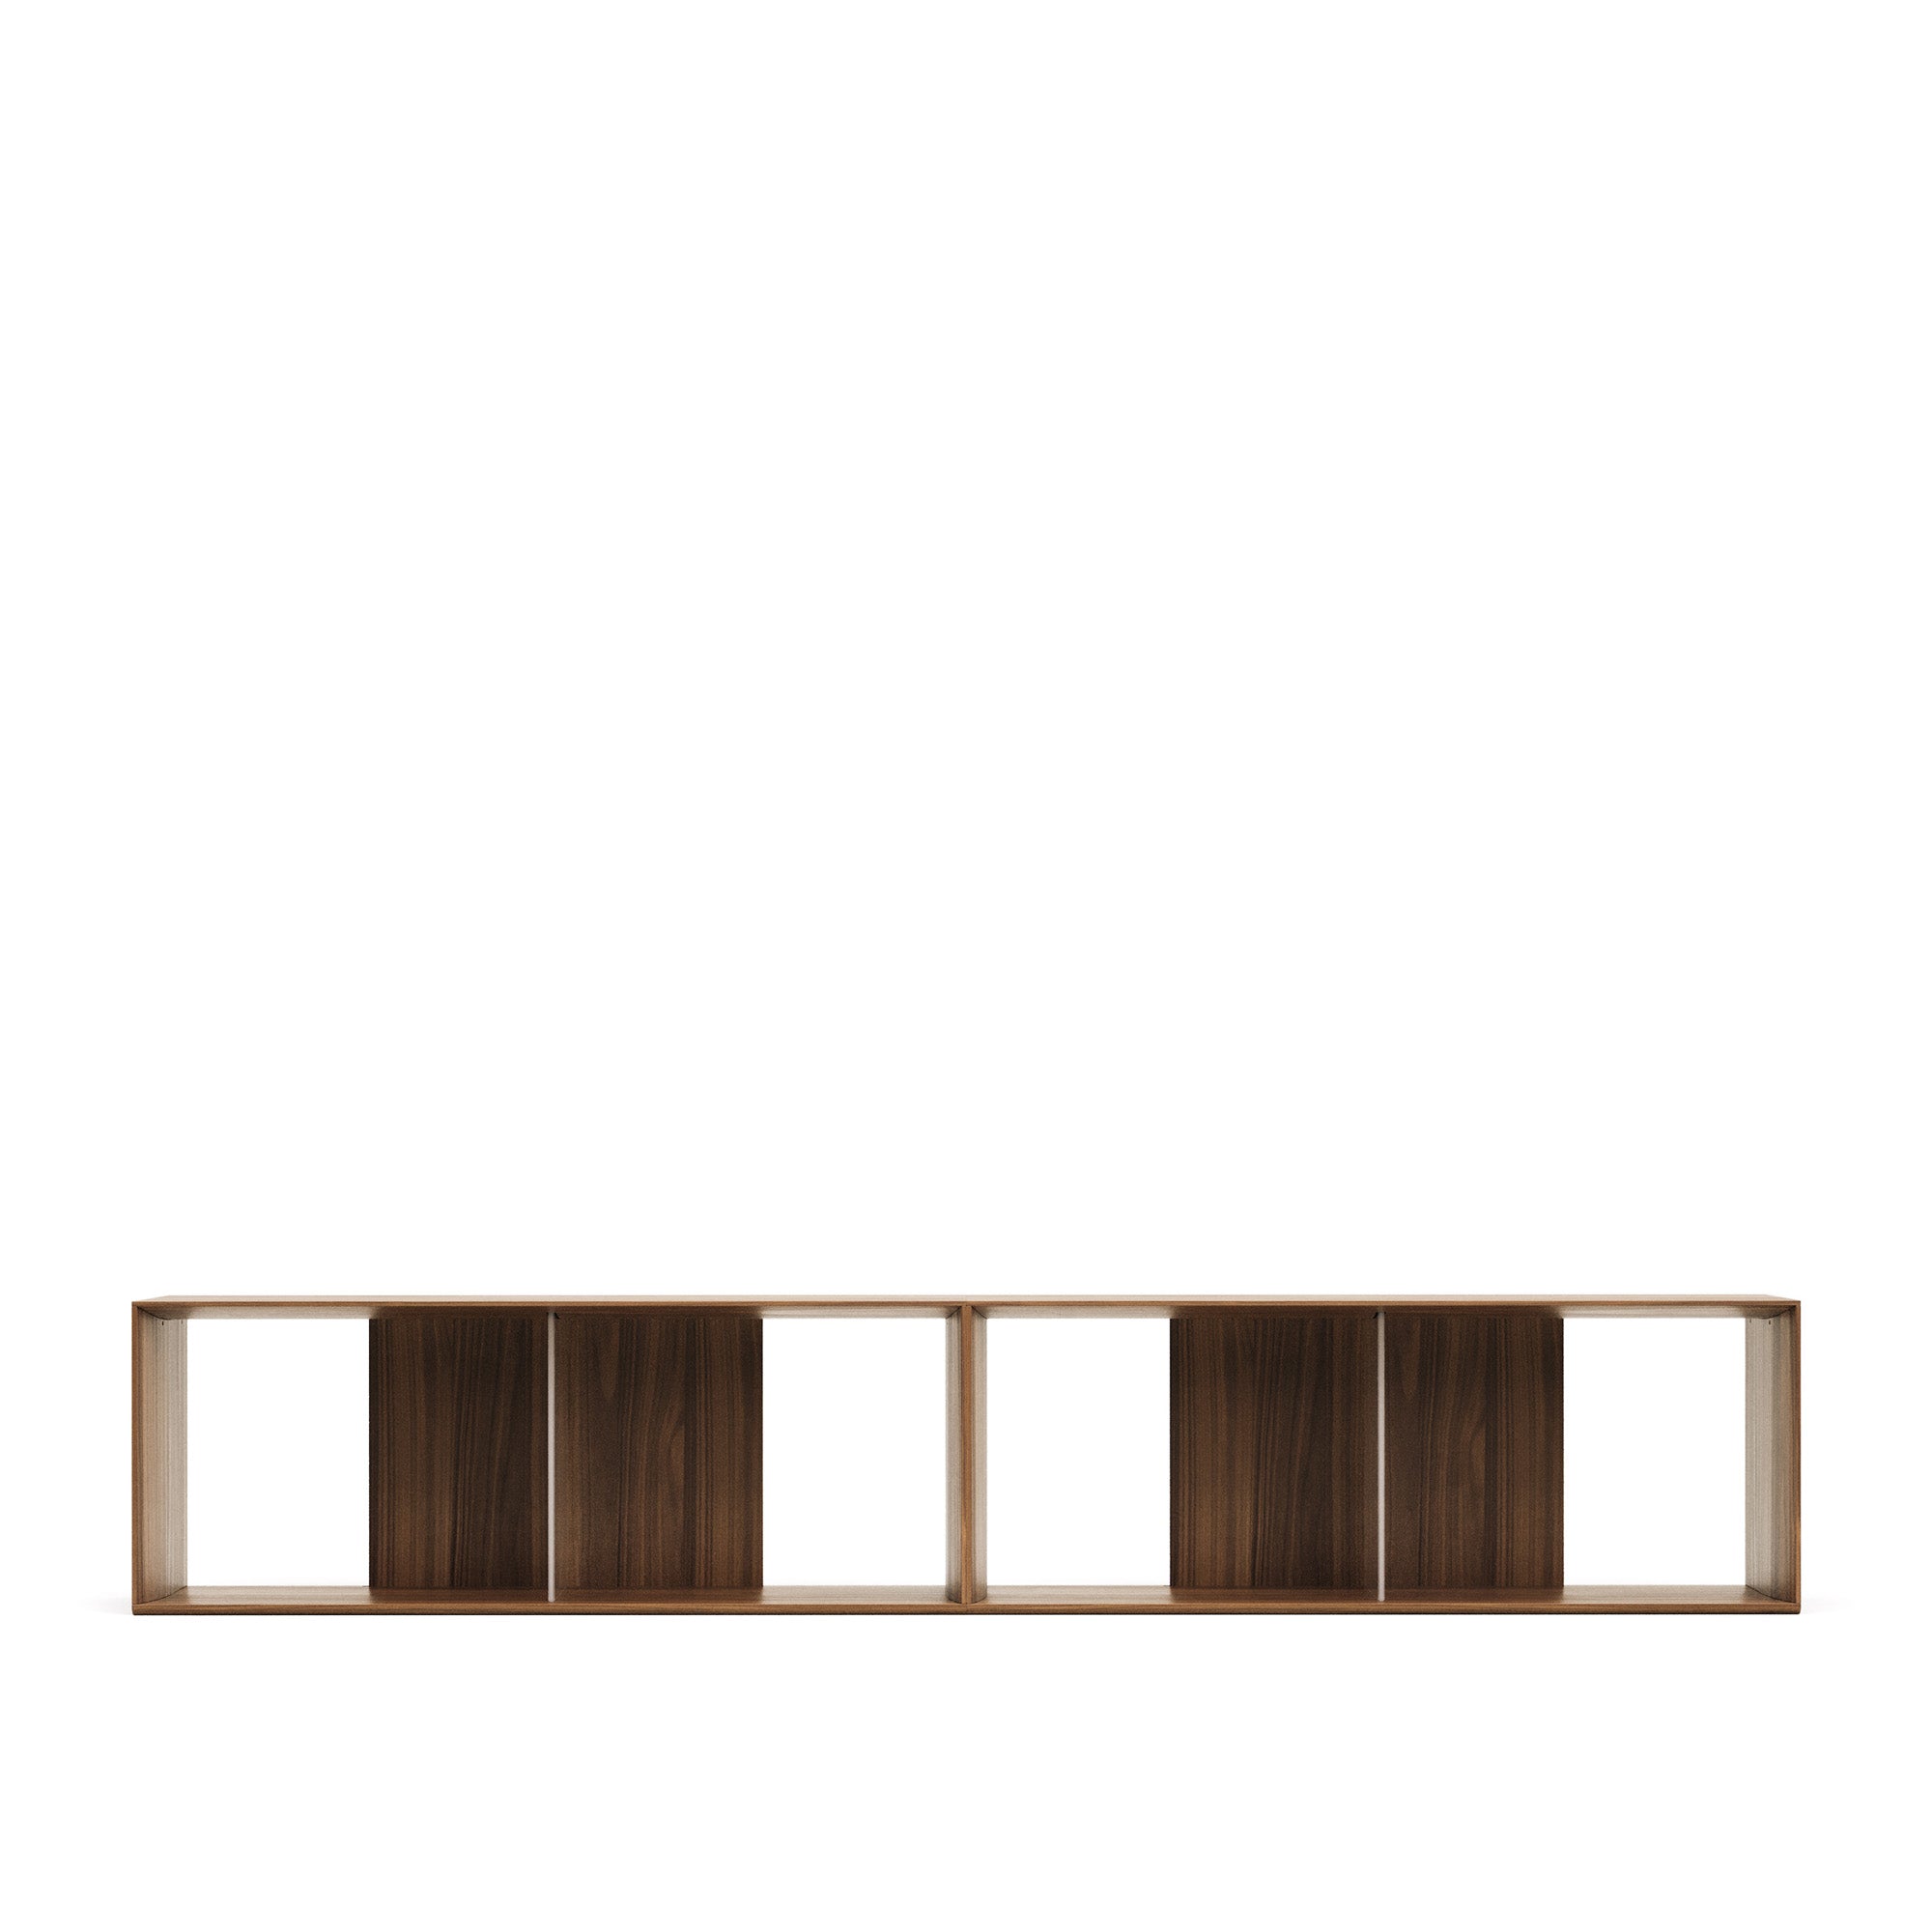 Litto set of 2 modular shelving units in walnut wood veneer, 101 x 76 cm